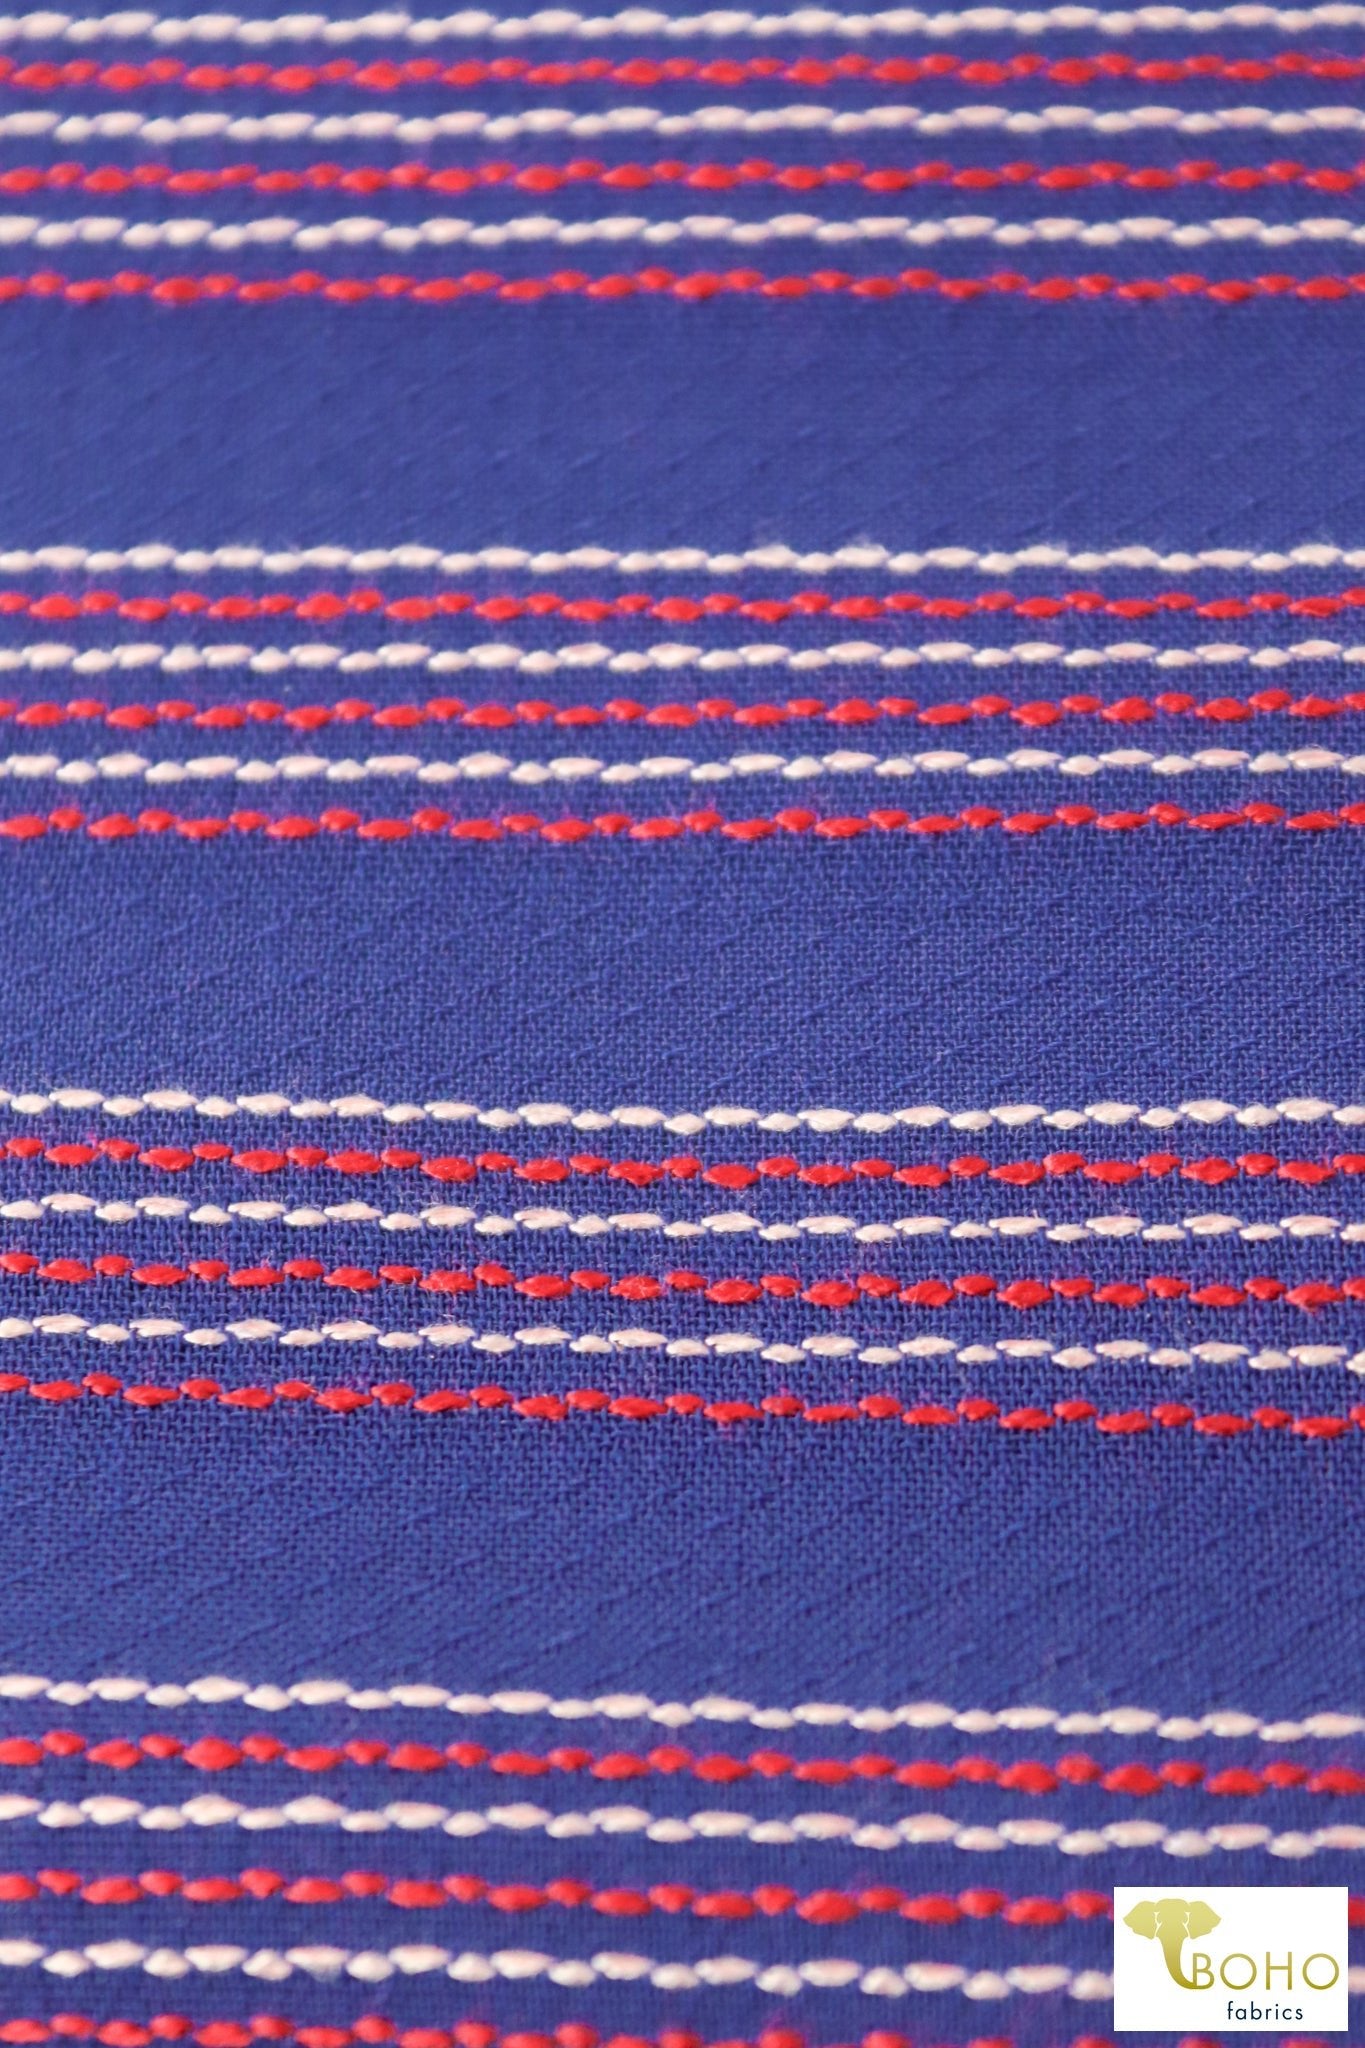 Blue Pacific Coast Highway Stripes. Embroidered Stripes on Blue Woven Fabric. WVS-308-BLU - Boho Fabrics